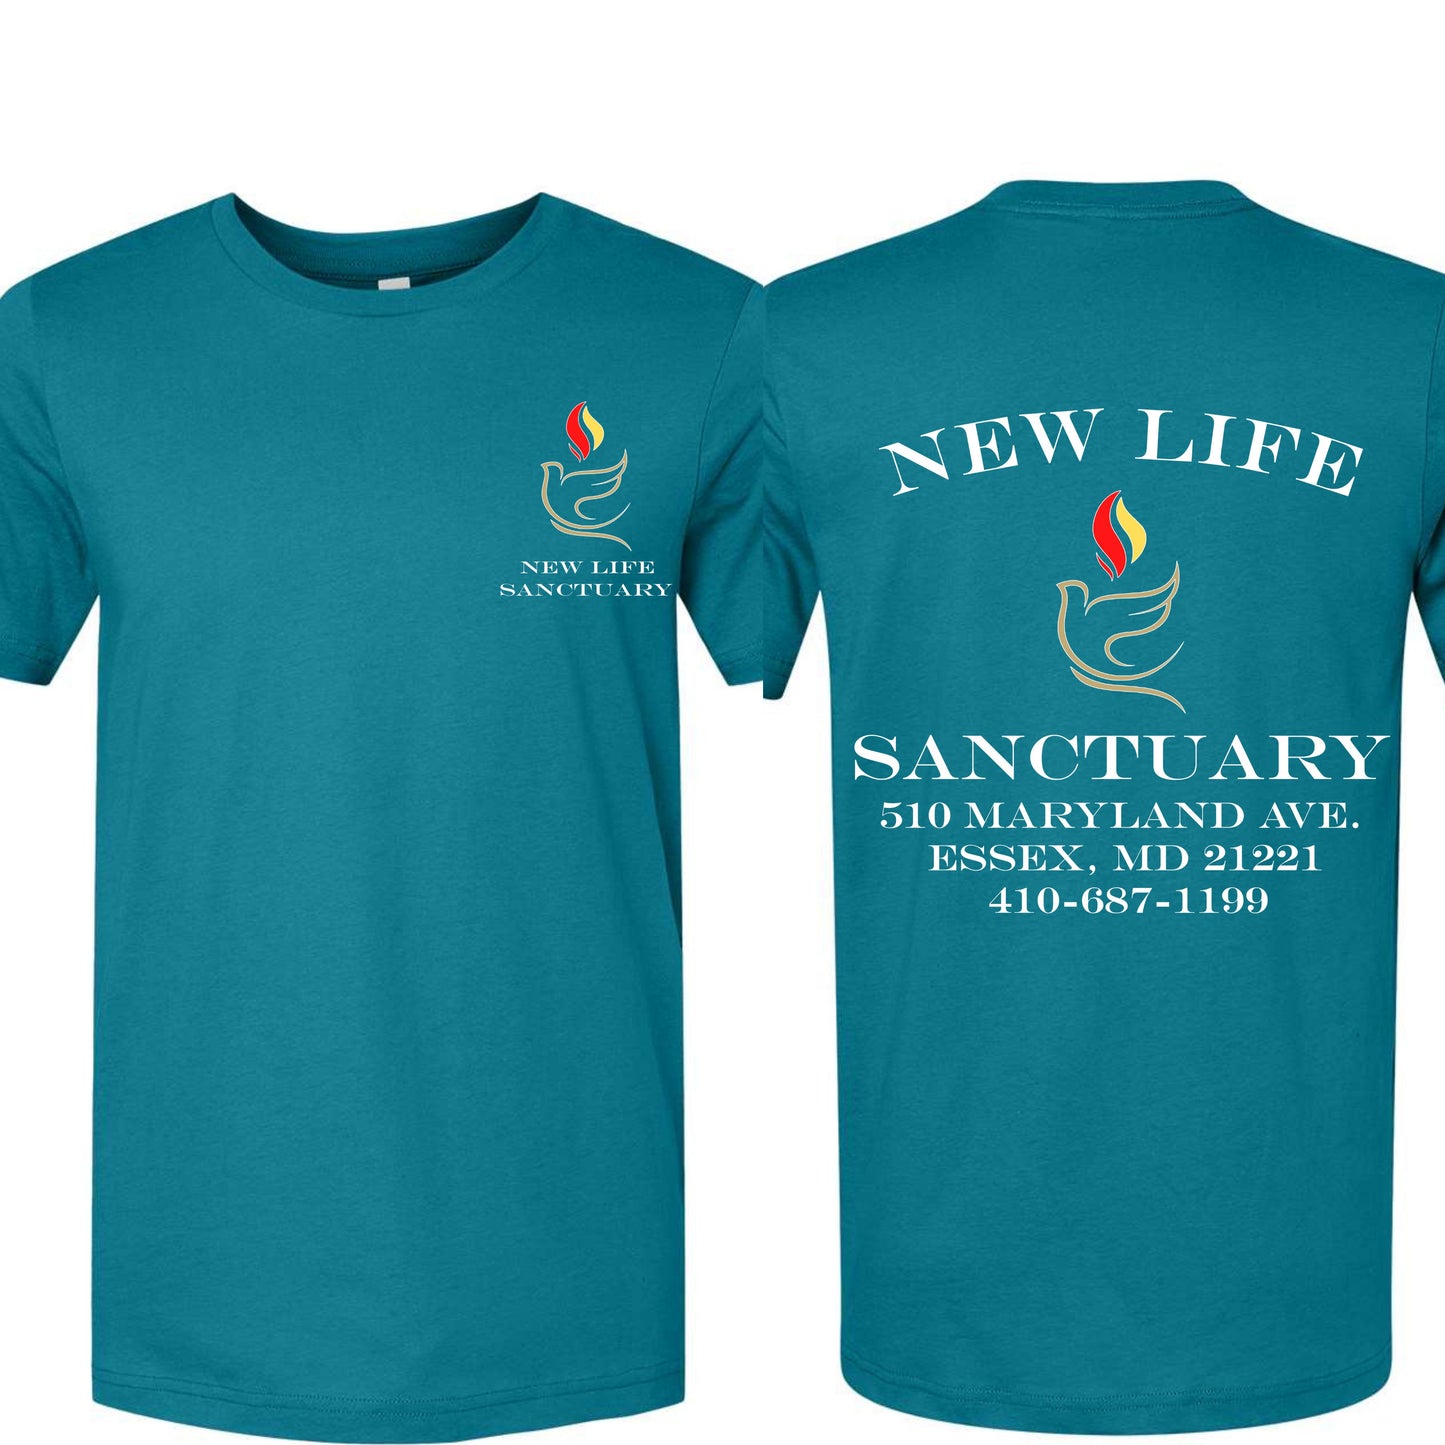 New Life Sanctuary Short Sleeve T-shirt